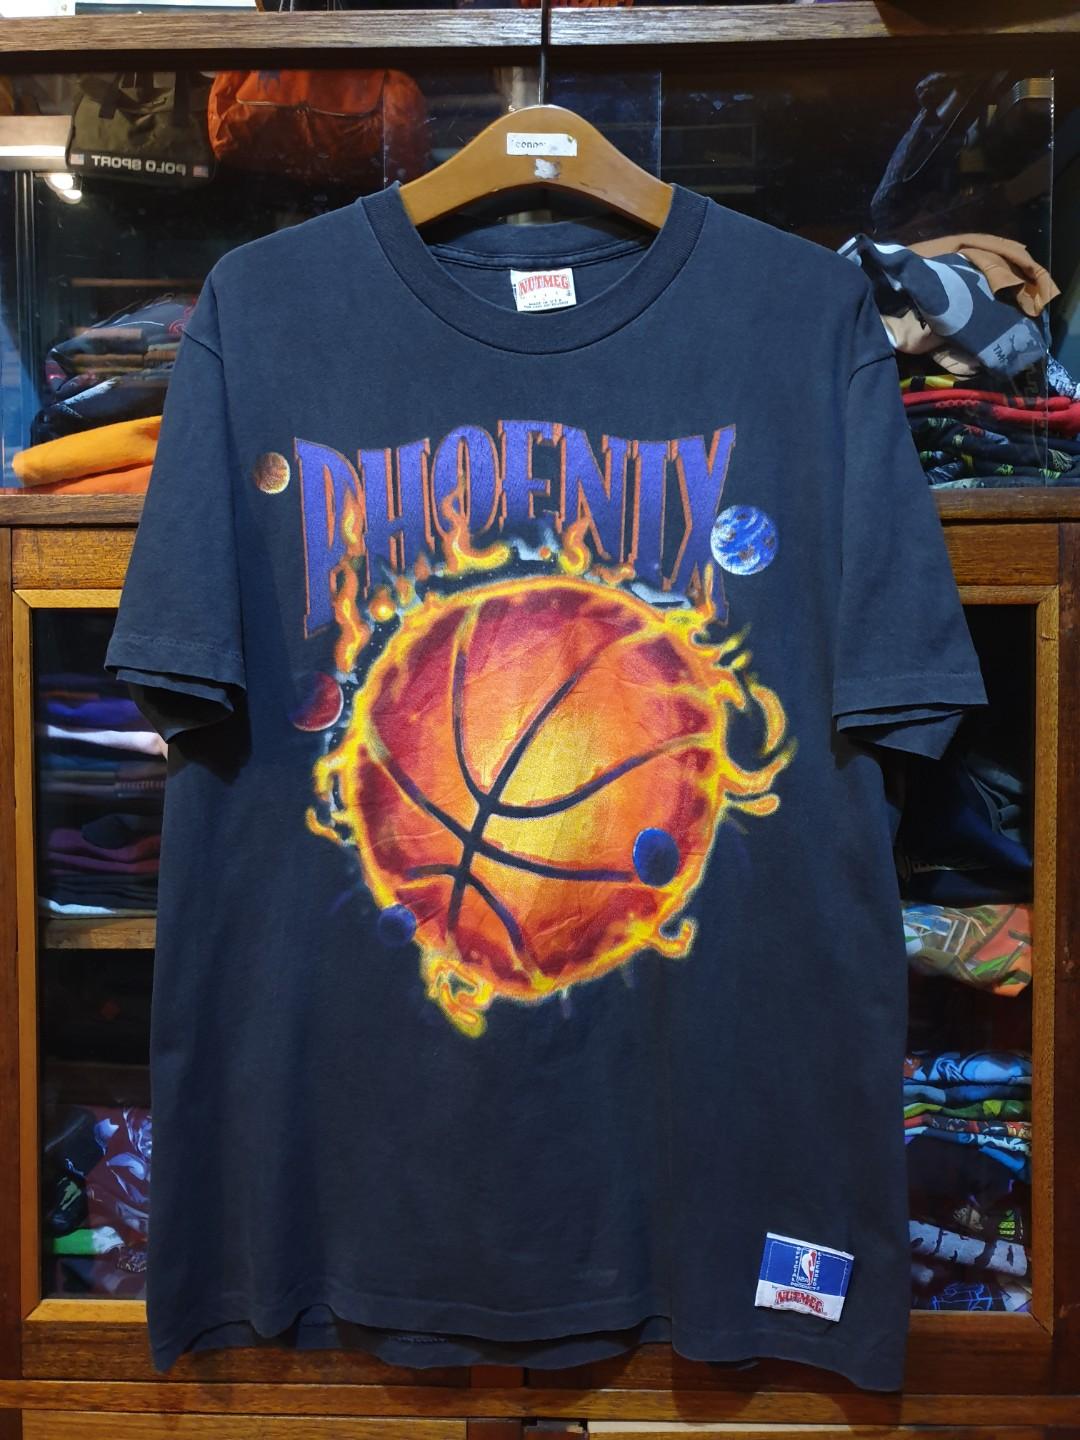 Vintage All Over Print NBA Phoenix Suns Tee Shirt Size Large 90s